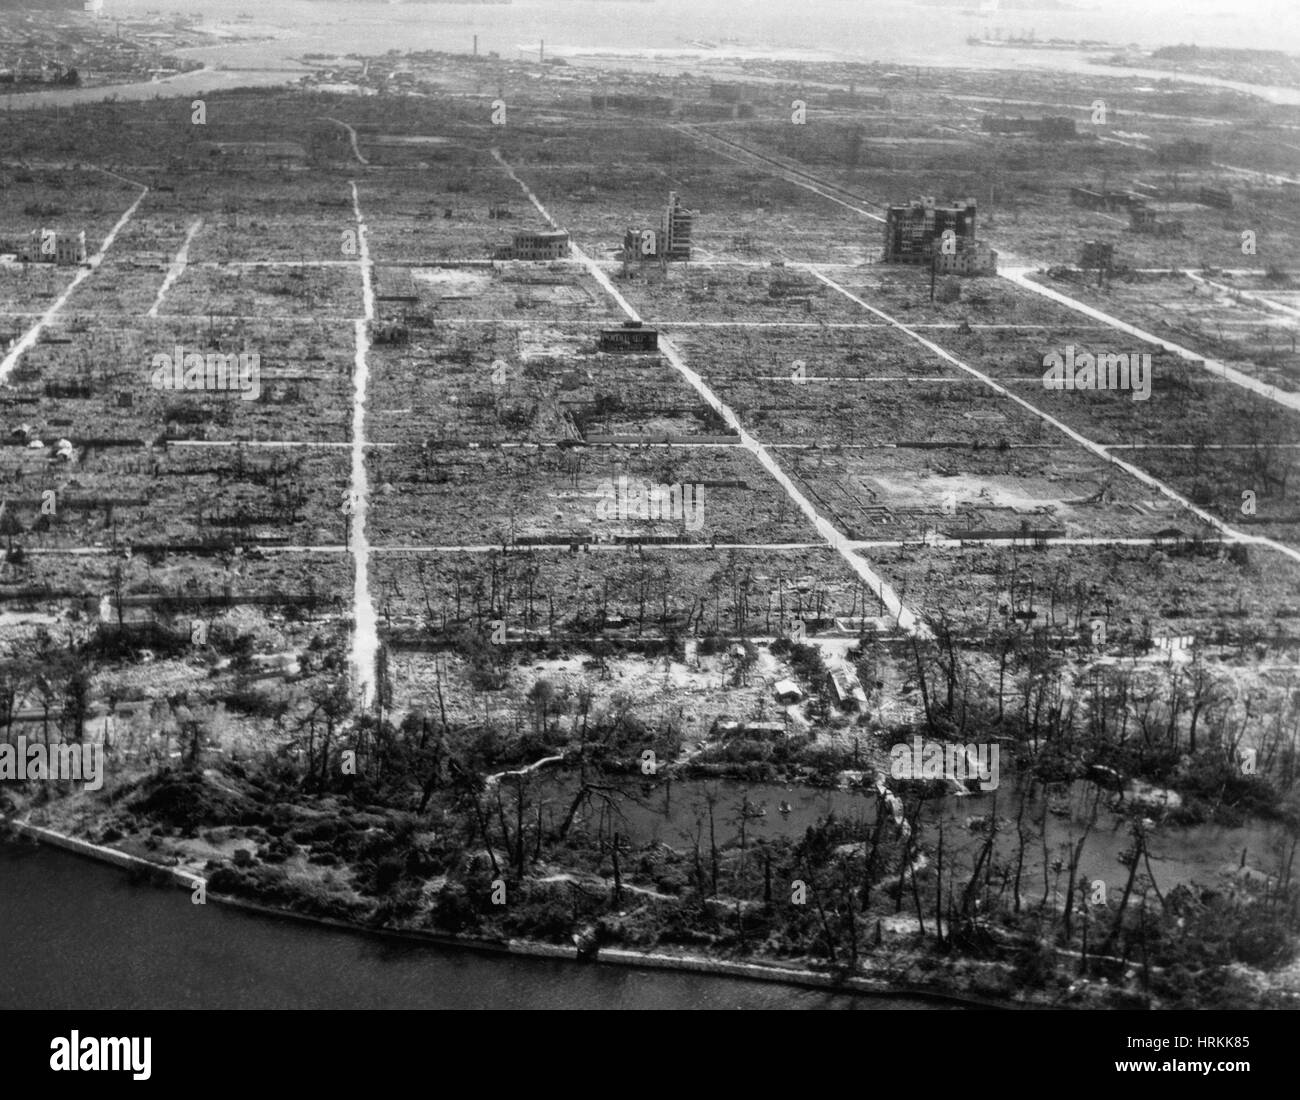 Atomic Bomb Destruction, Hiroshima Stock Photo